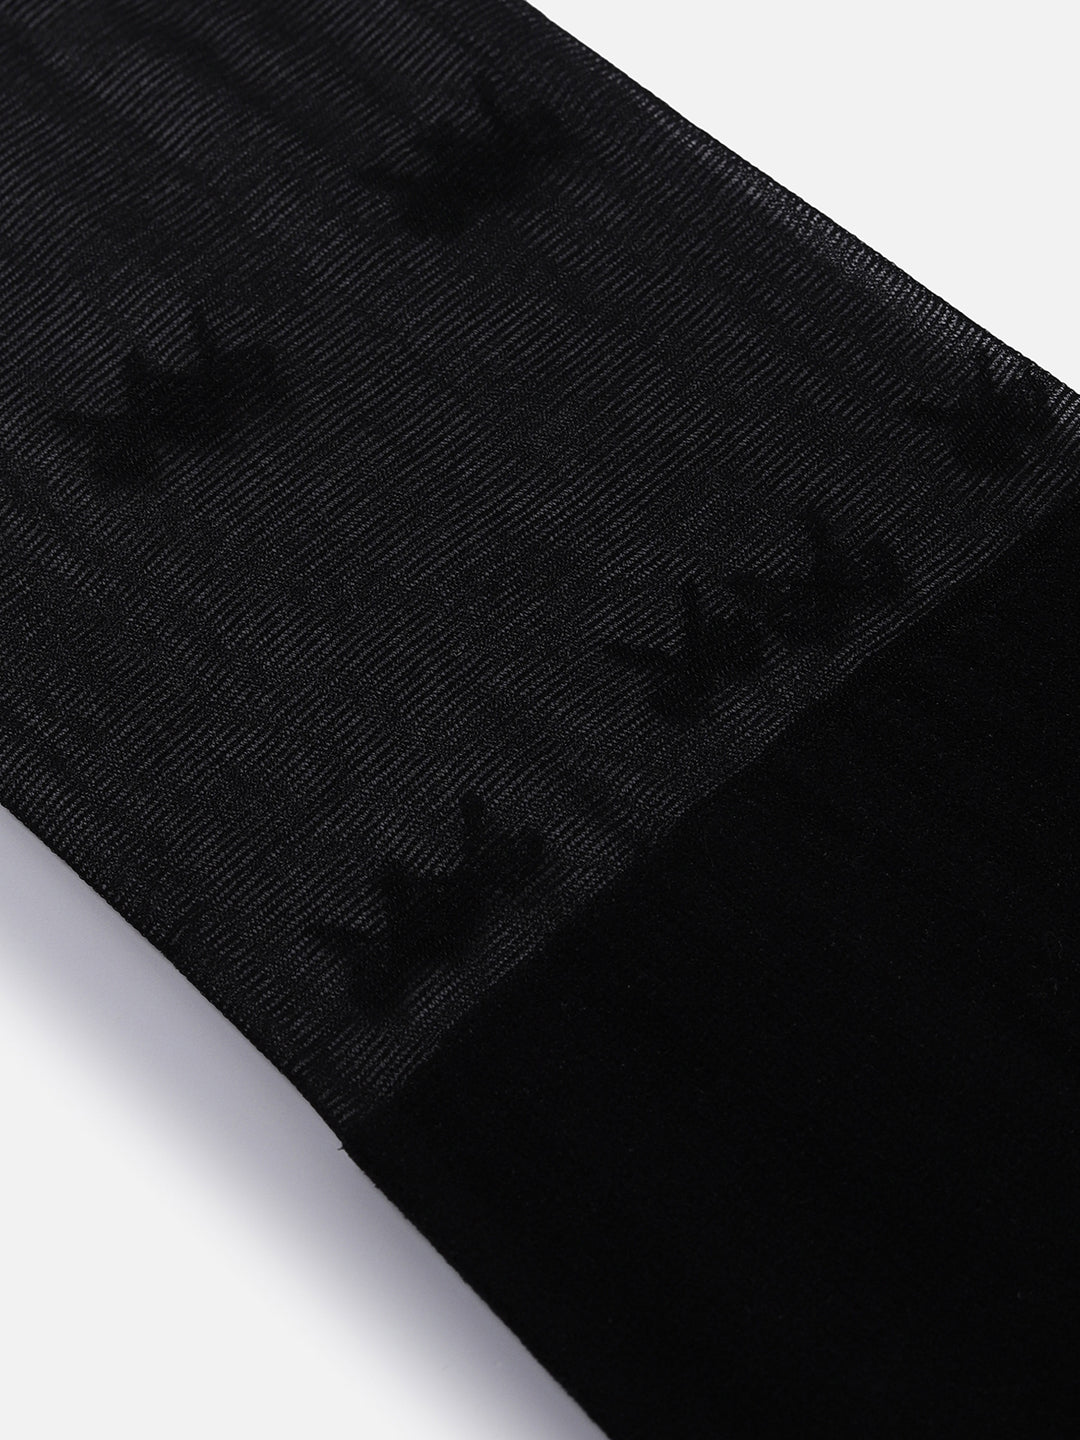 Black Printed Sheer Stockings